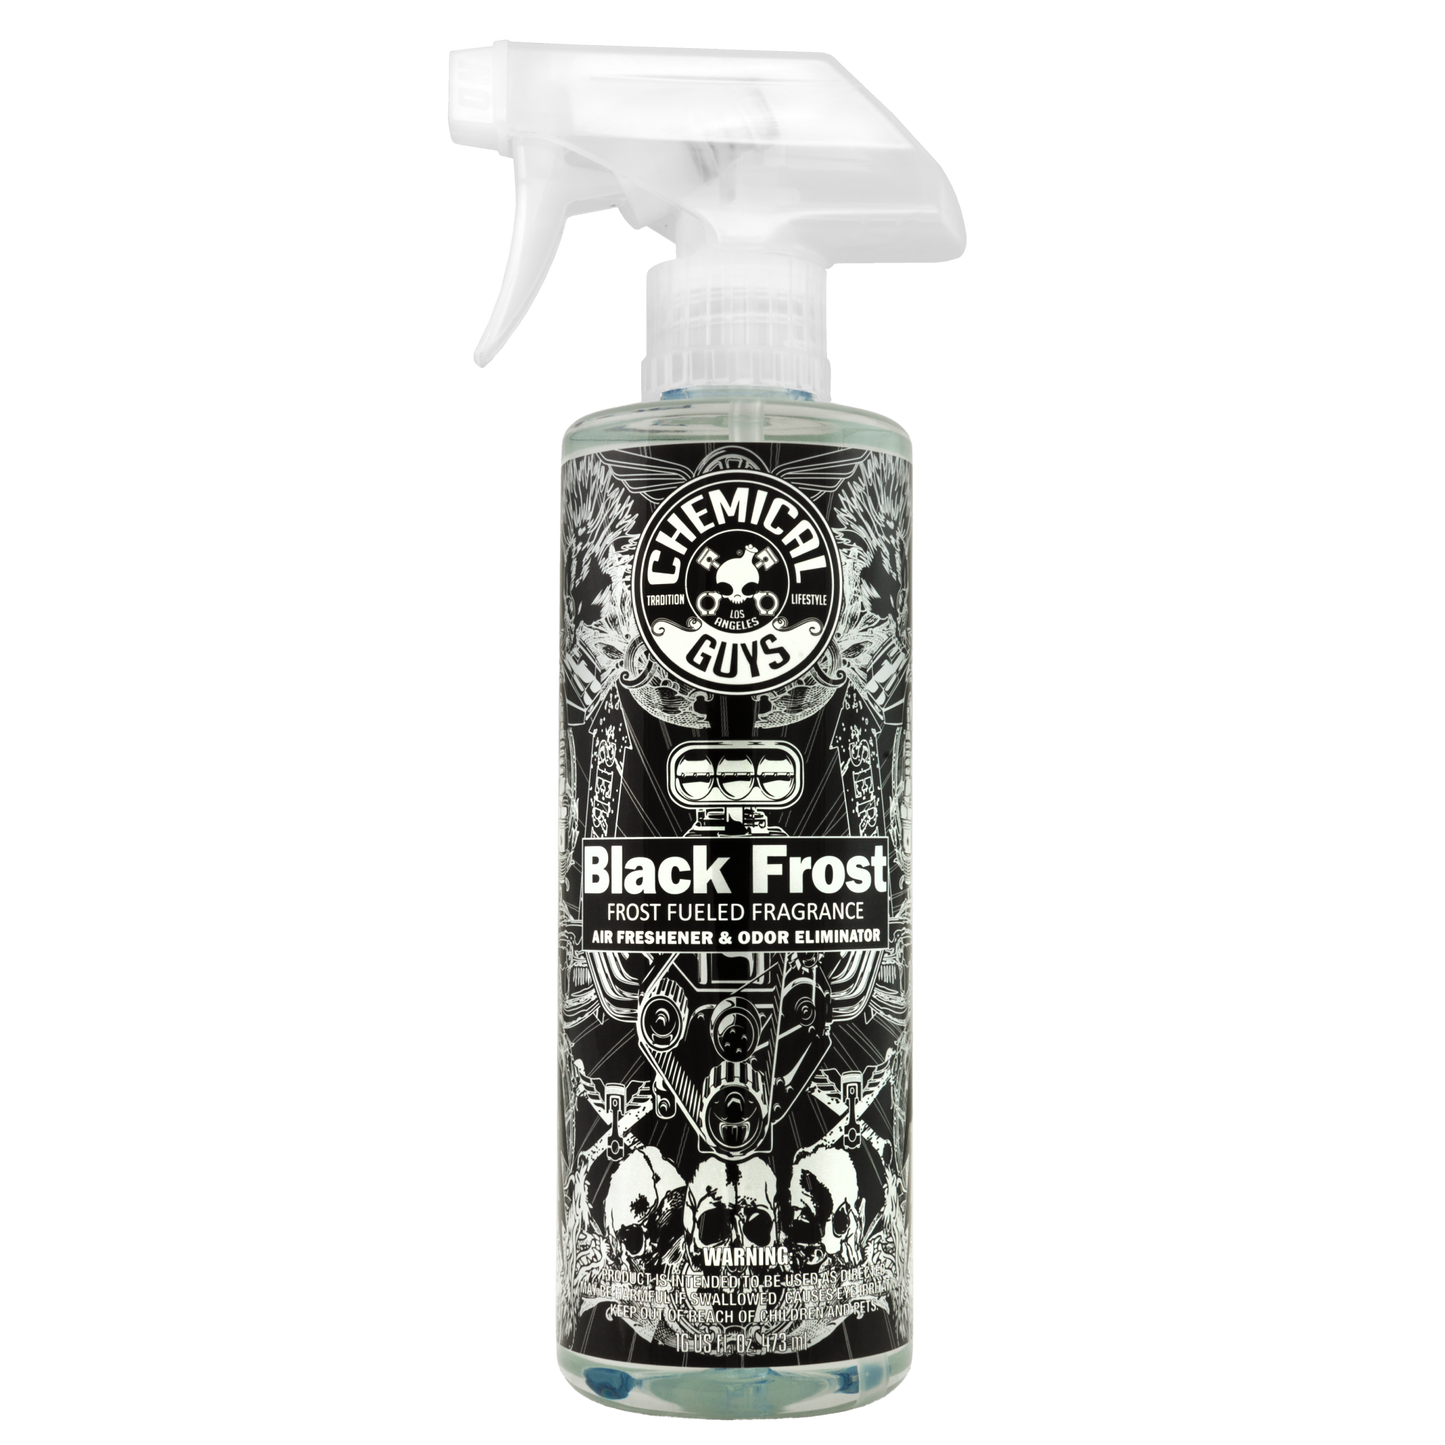 Chemical Guys Black frost Air Freshener 16oz